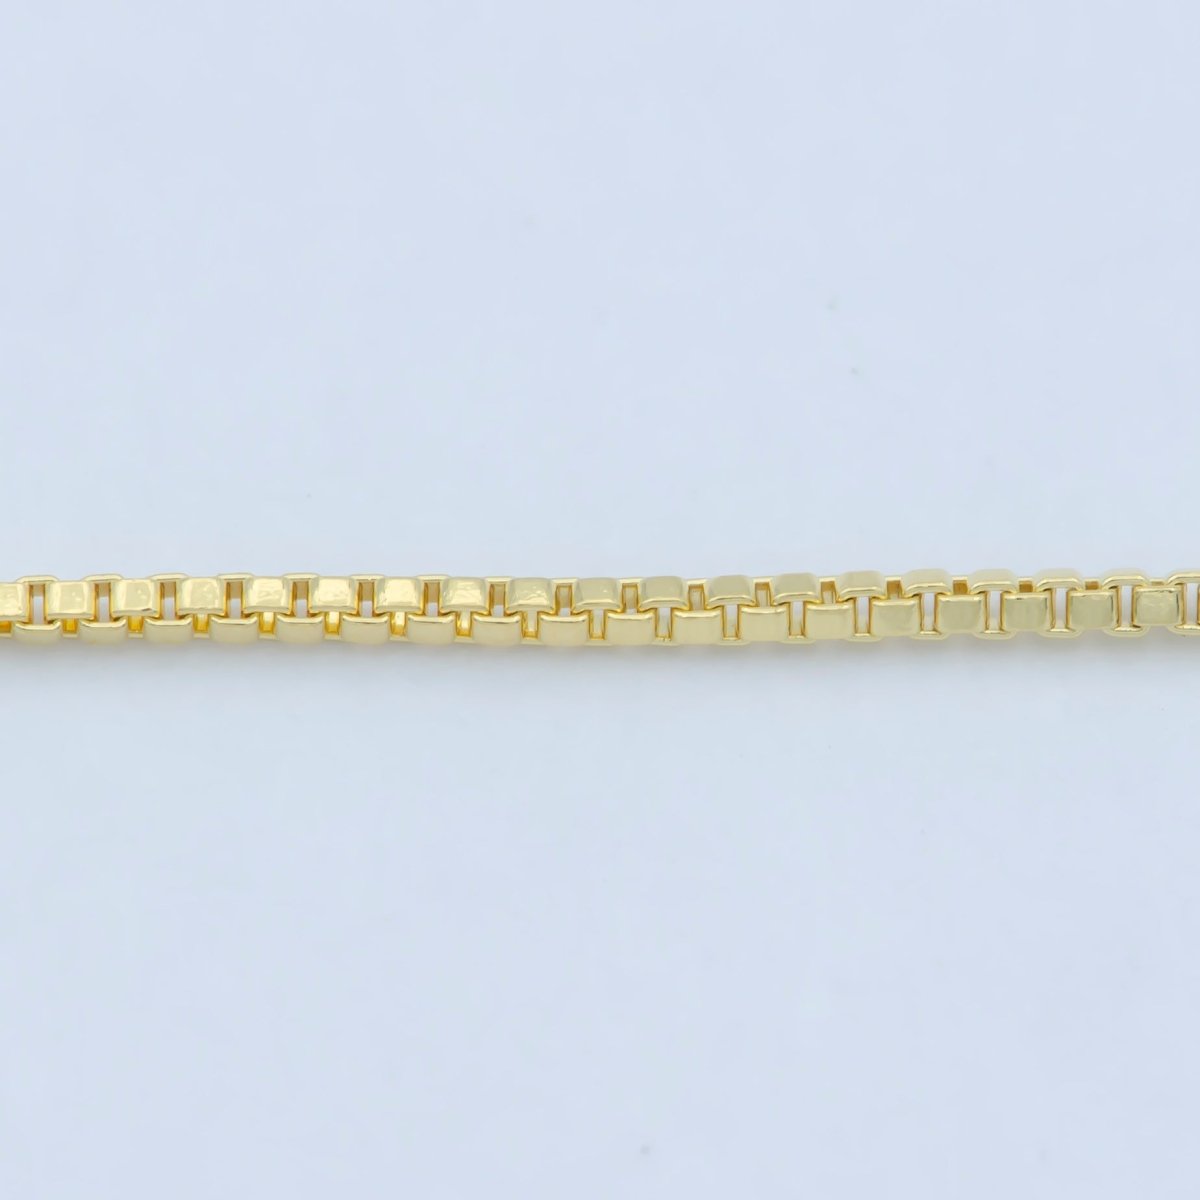 Fine Gold Box Chain 0.5mm BOX Chain - Dainty Box chain 17.5 inch Box Chain Necklace Jewelry Making Supply | WA-242 Clearance Pricing - DLUXCA